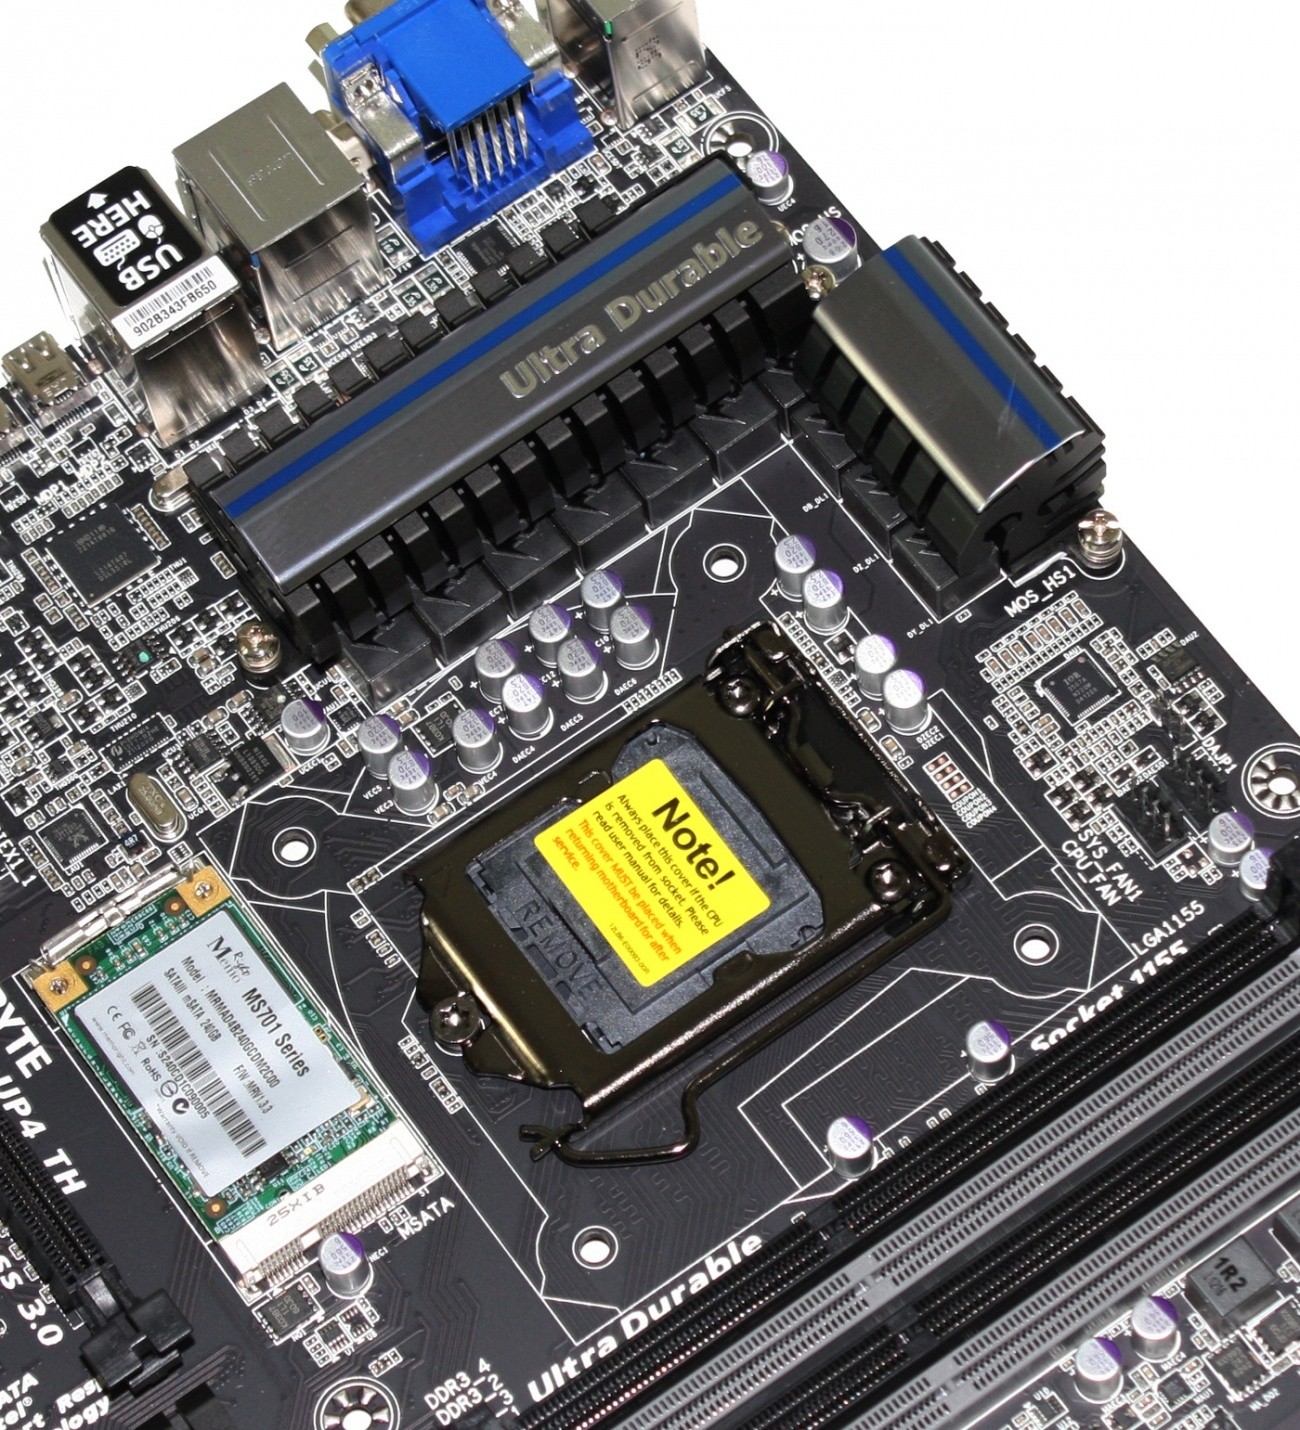 GIGABYTE Z77X-UP4 TH (Intel Z77) Motherboard Review